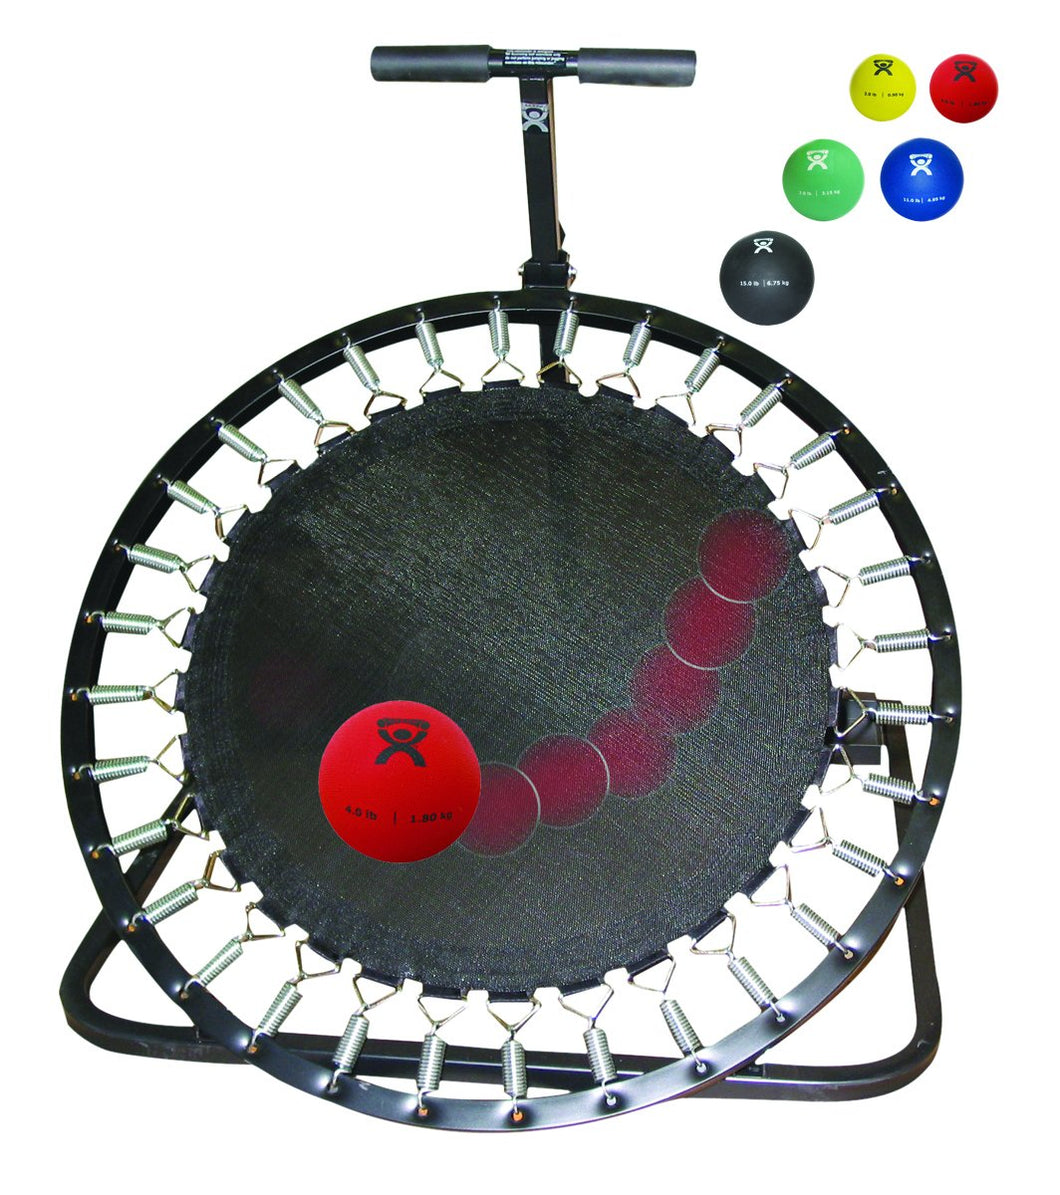 Adjustable Ball Rebounder - Set with Circular Rebounder, Vertical Metal Rack, 5-balls (1 each: 2,4,7,11,15 lb)